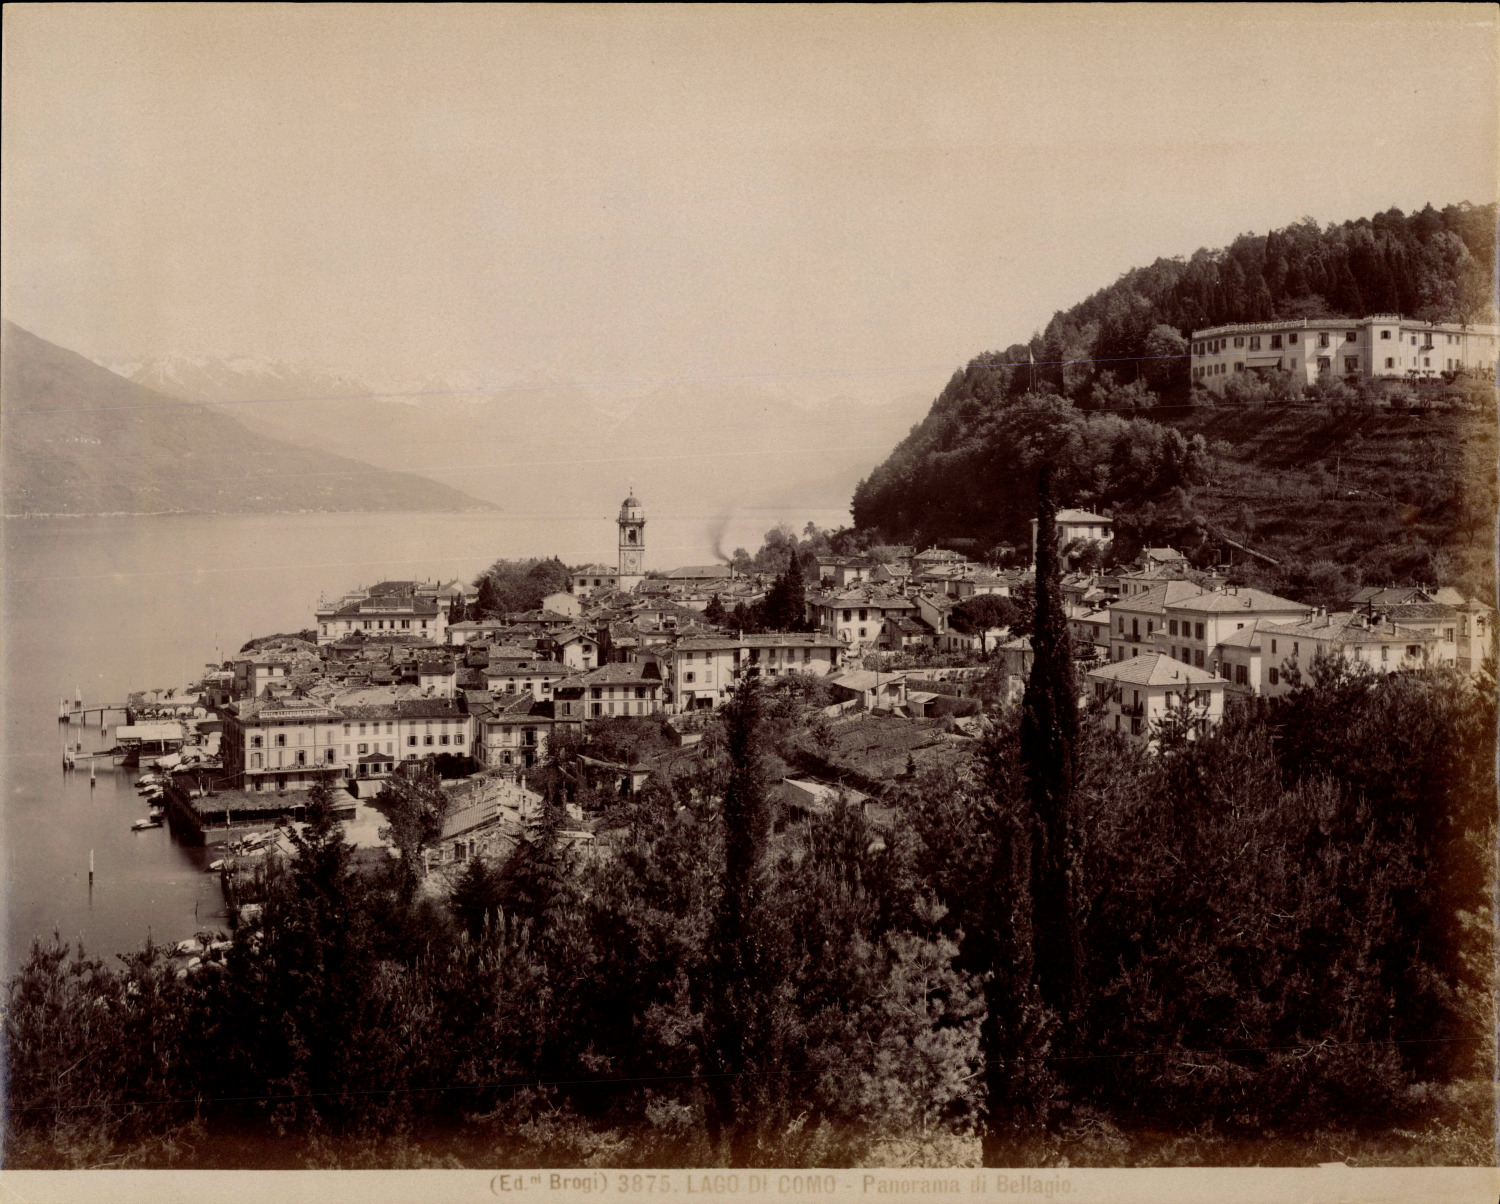 Italy, Lake Como, panorama of Bellagio, Ed. Brogi Vintage print, Tirage a 